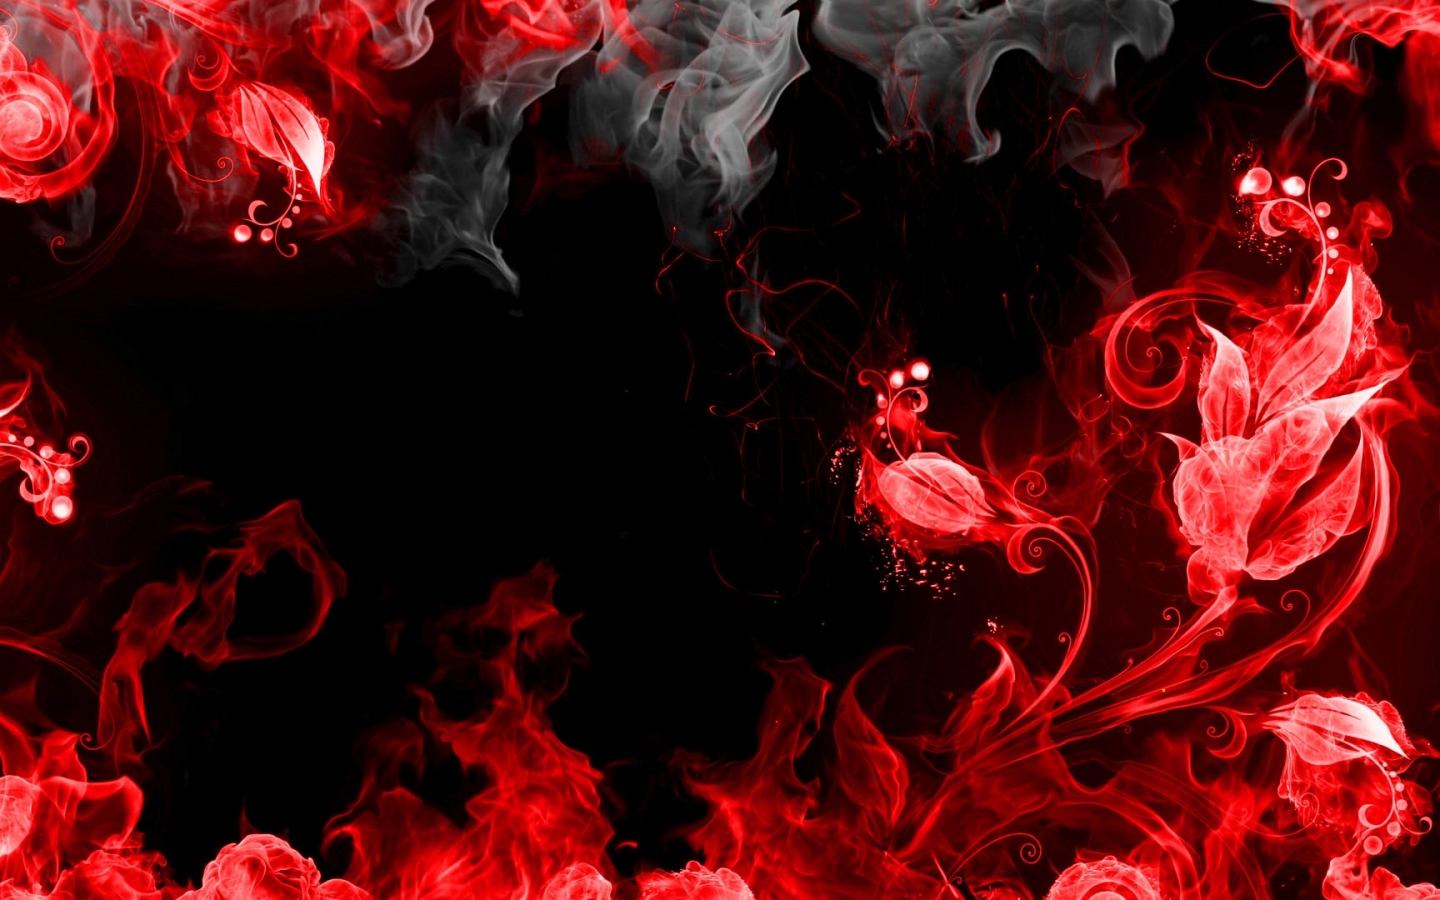 HD Red Abstract Wallpapers - WallpaperSafari